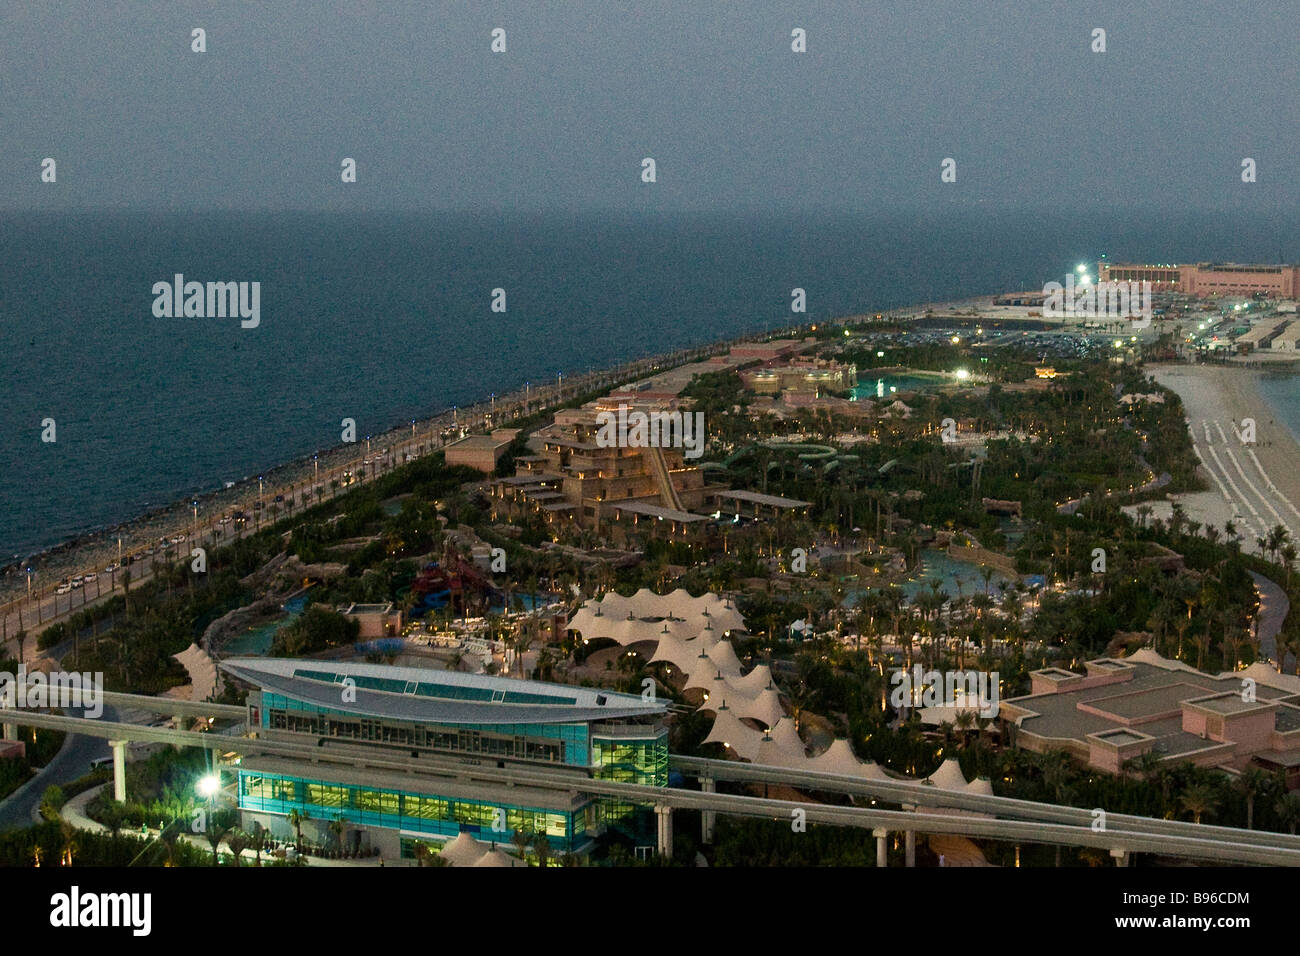 View the Atlantis Palm Hotel and the artificial island shaped like a palm Dubai United Arab Emirates Stock Photo